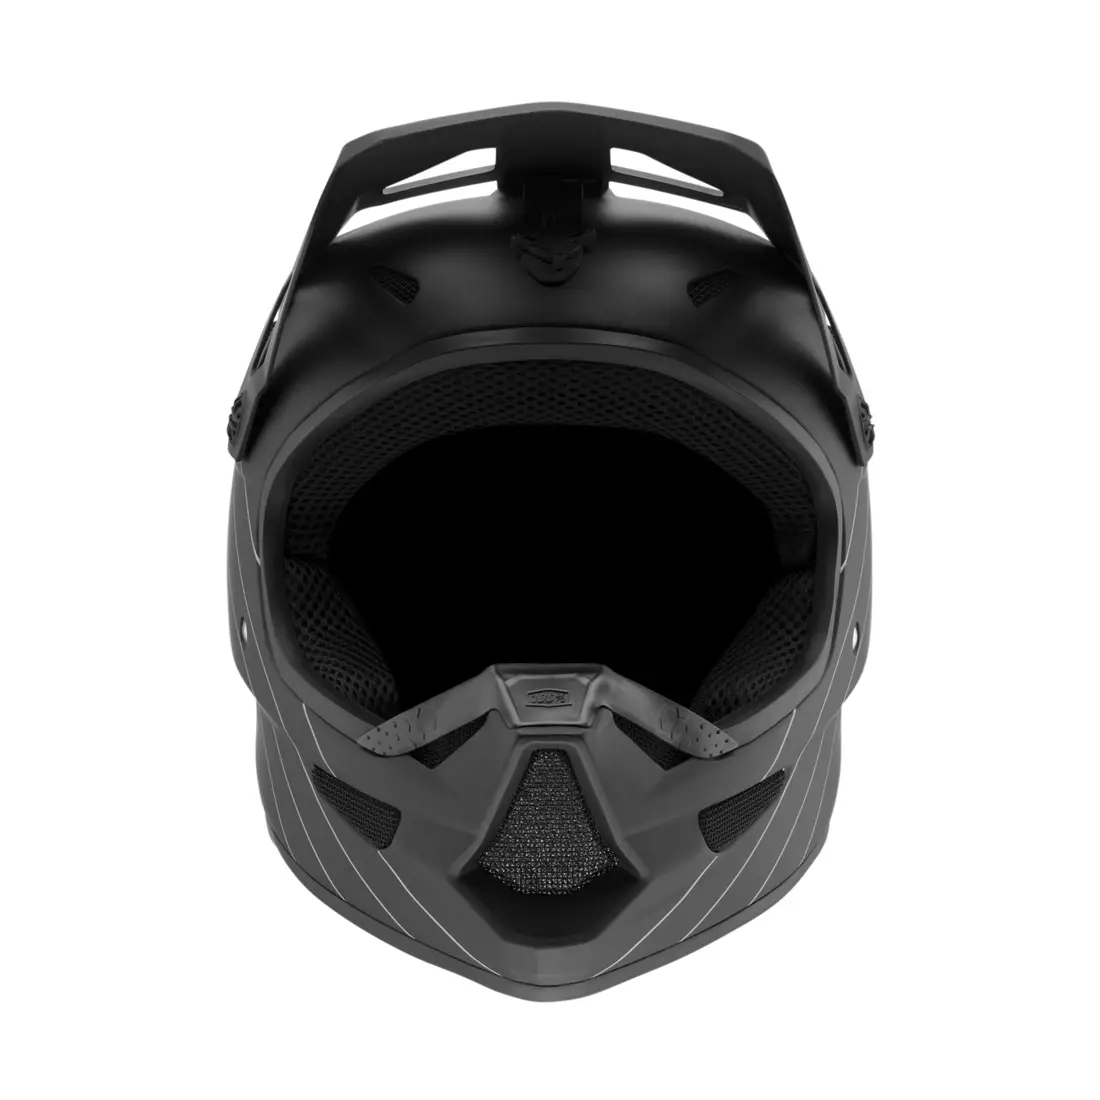 100% Fahrradhelm full face STATUS DH/BMX Helmet Essential black STO-80011-001-09